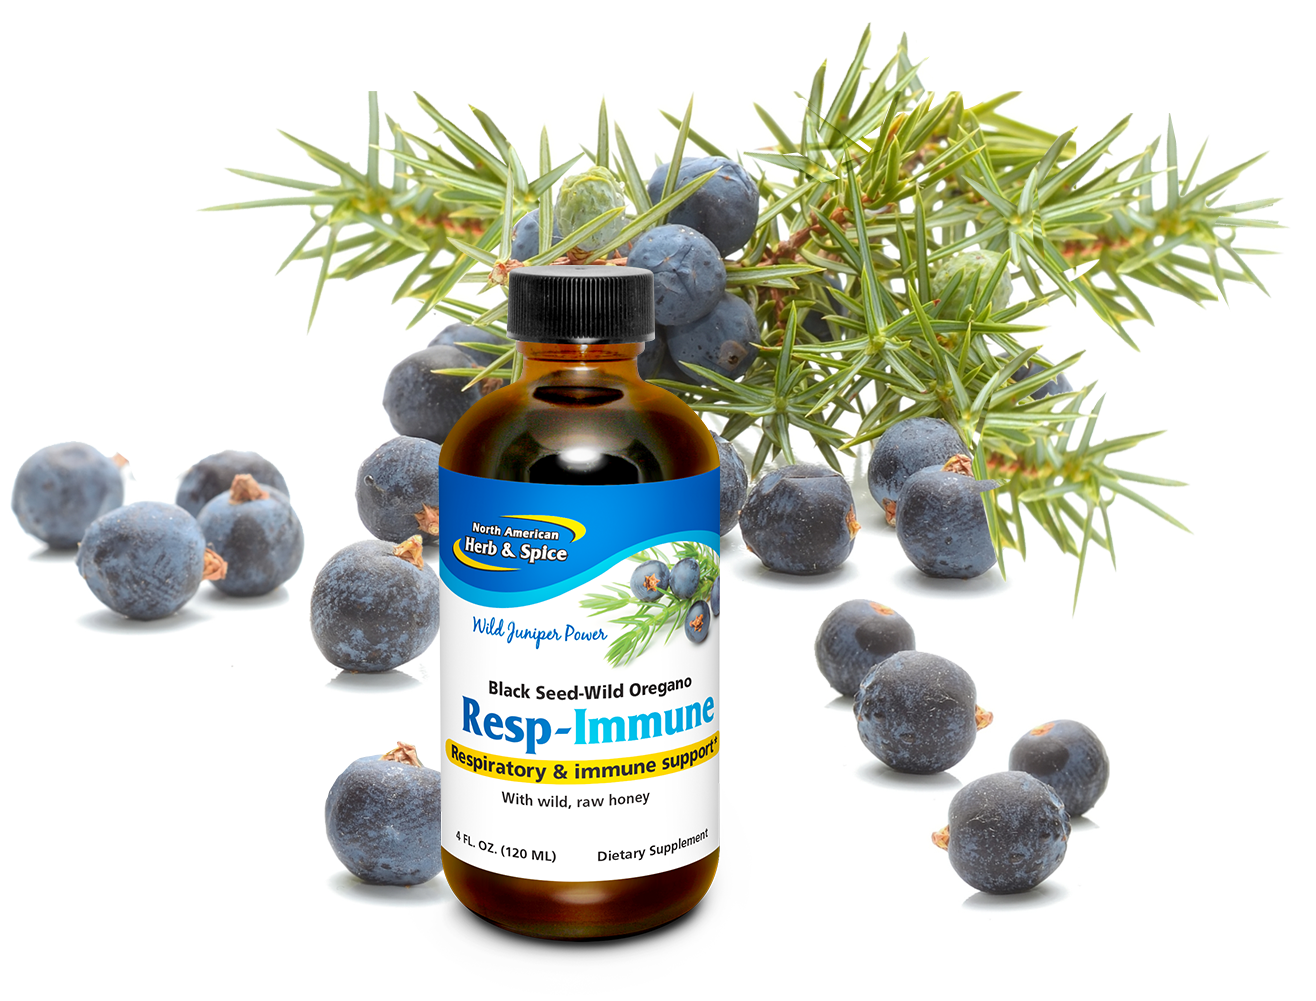 Wild juniper berries with Resp-Immune product bottle